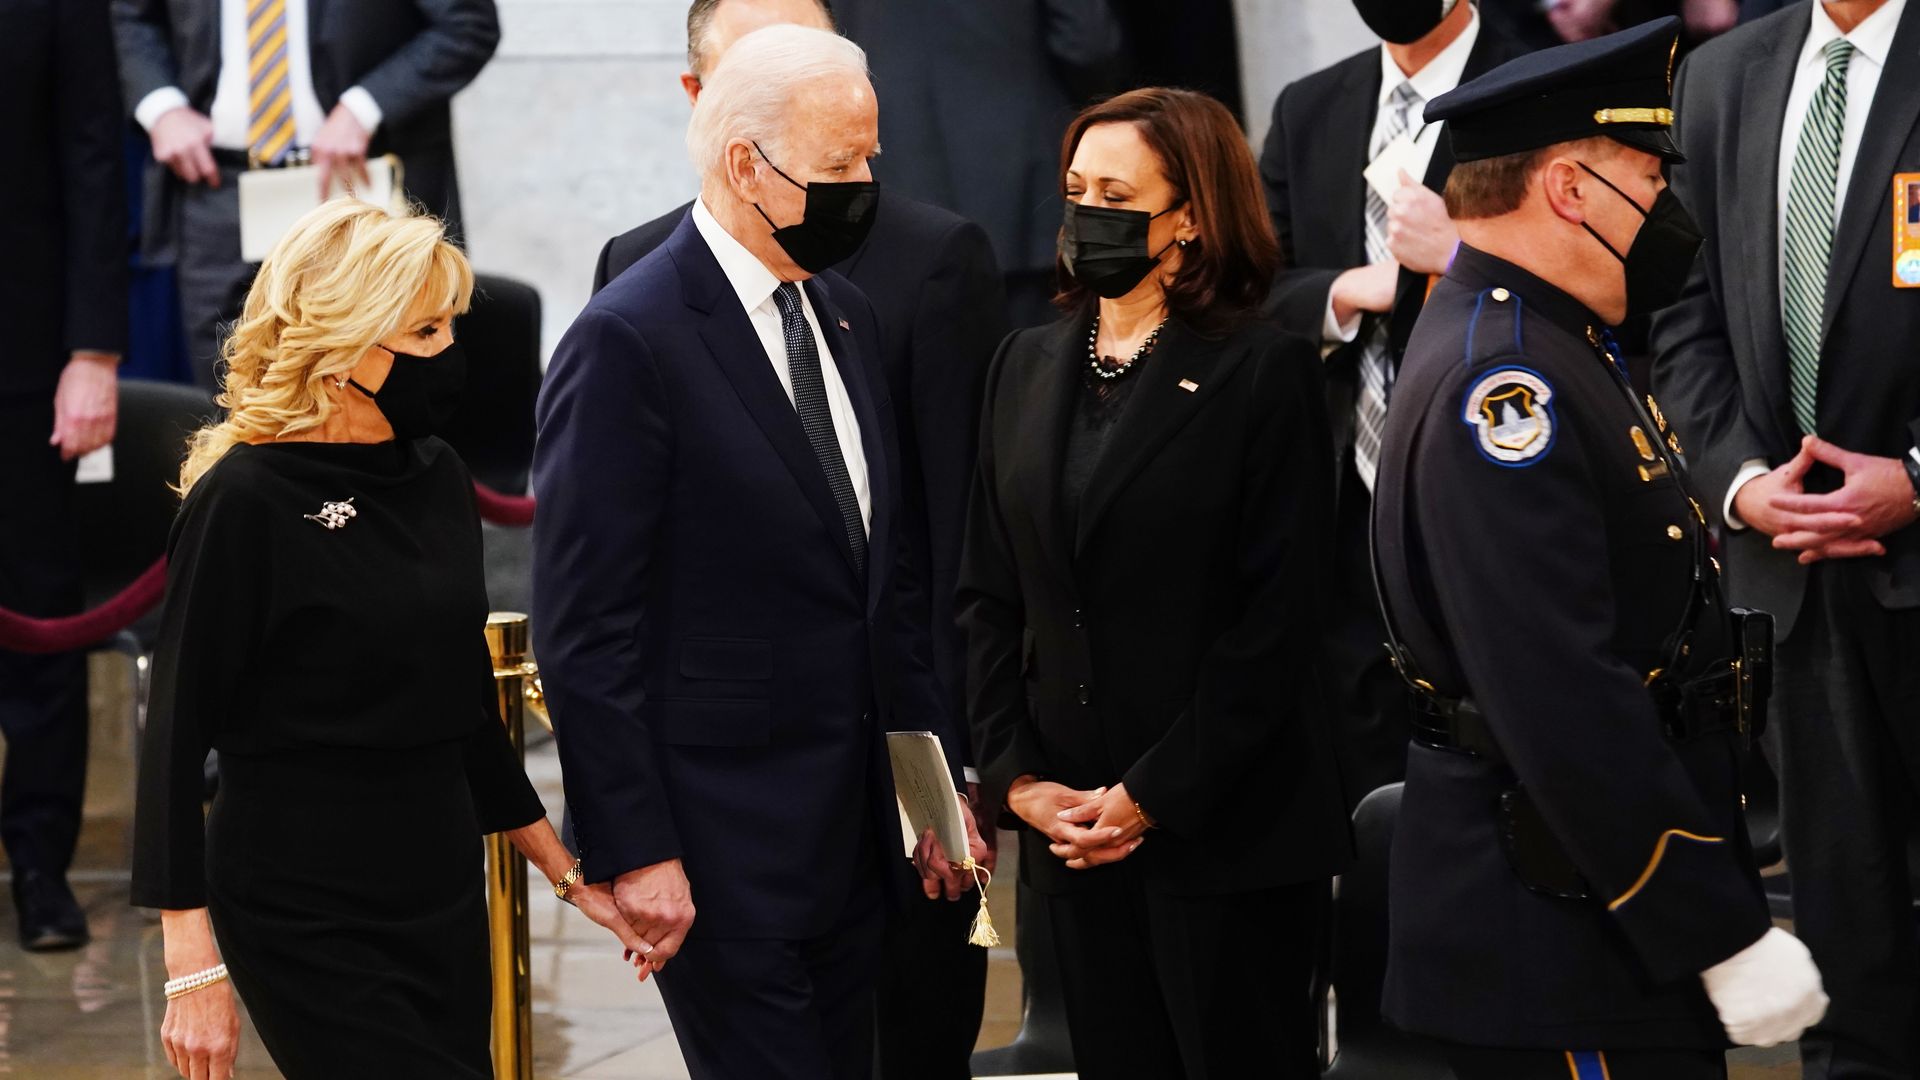 President Biden, Vice President Kamala Harris and first lady Jill Biden are seen in the U.S. Capitol on Thursday.